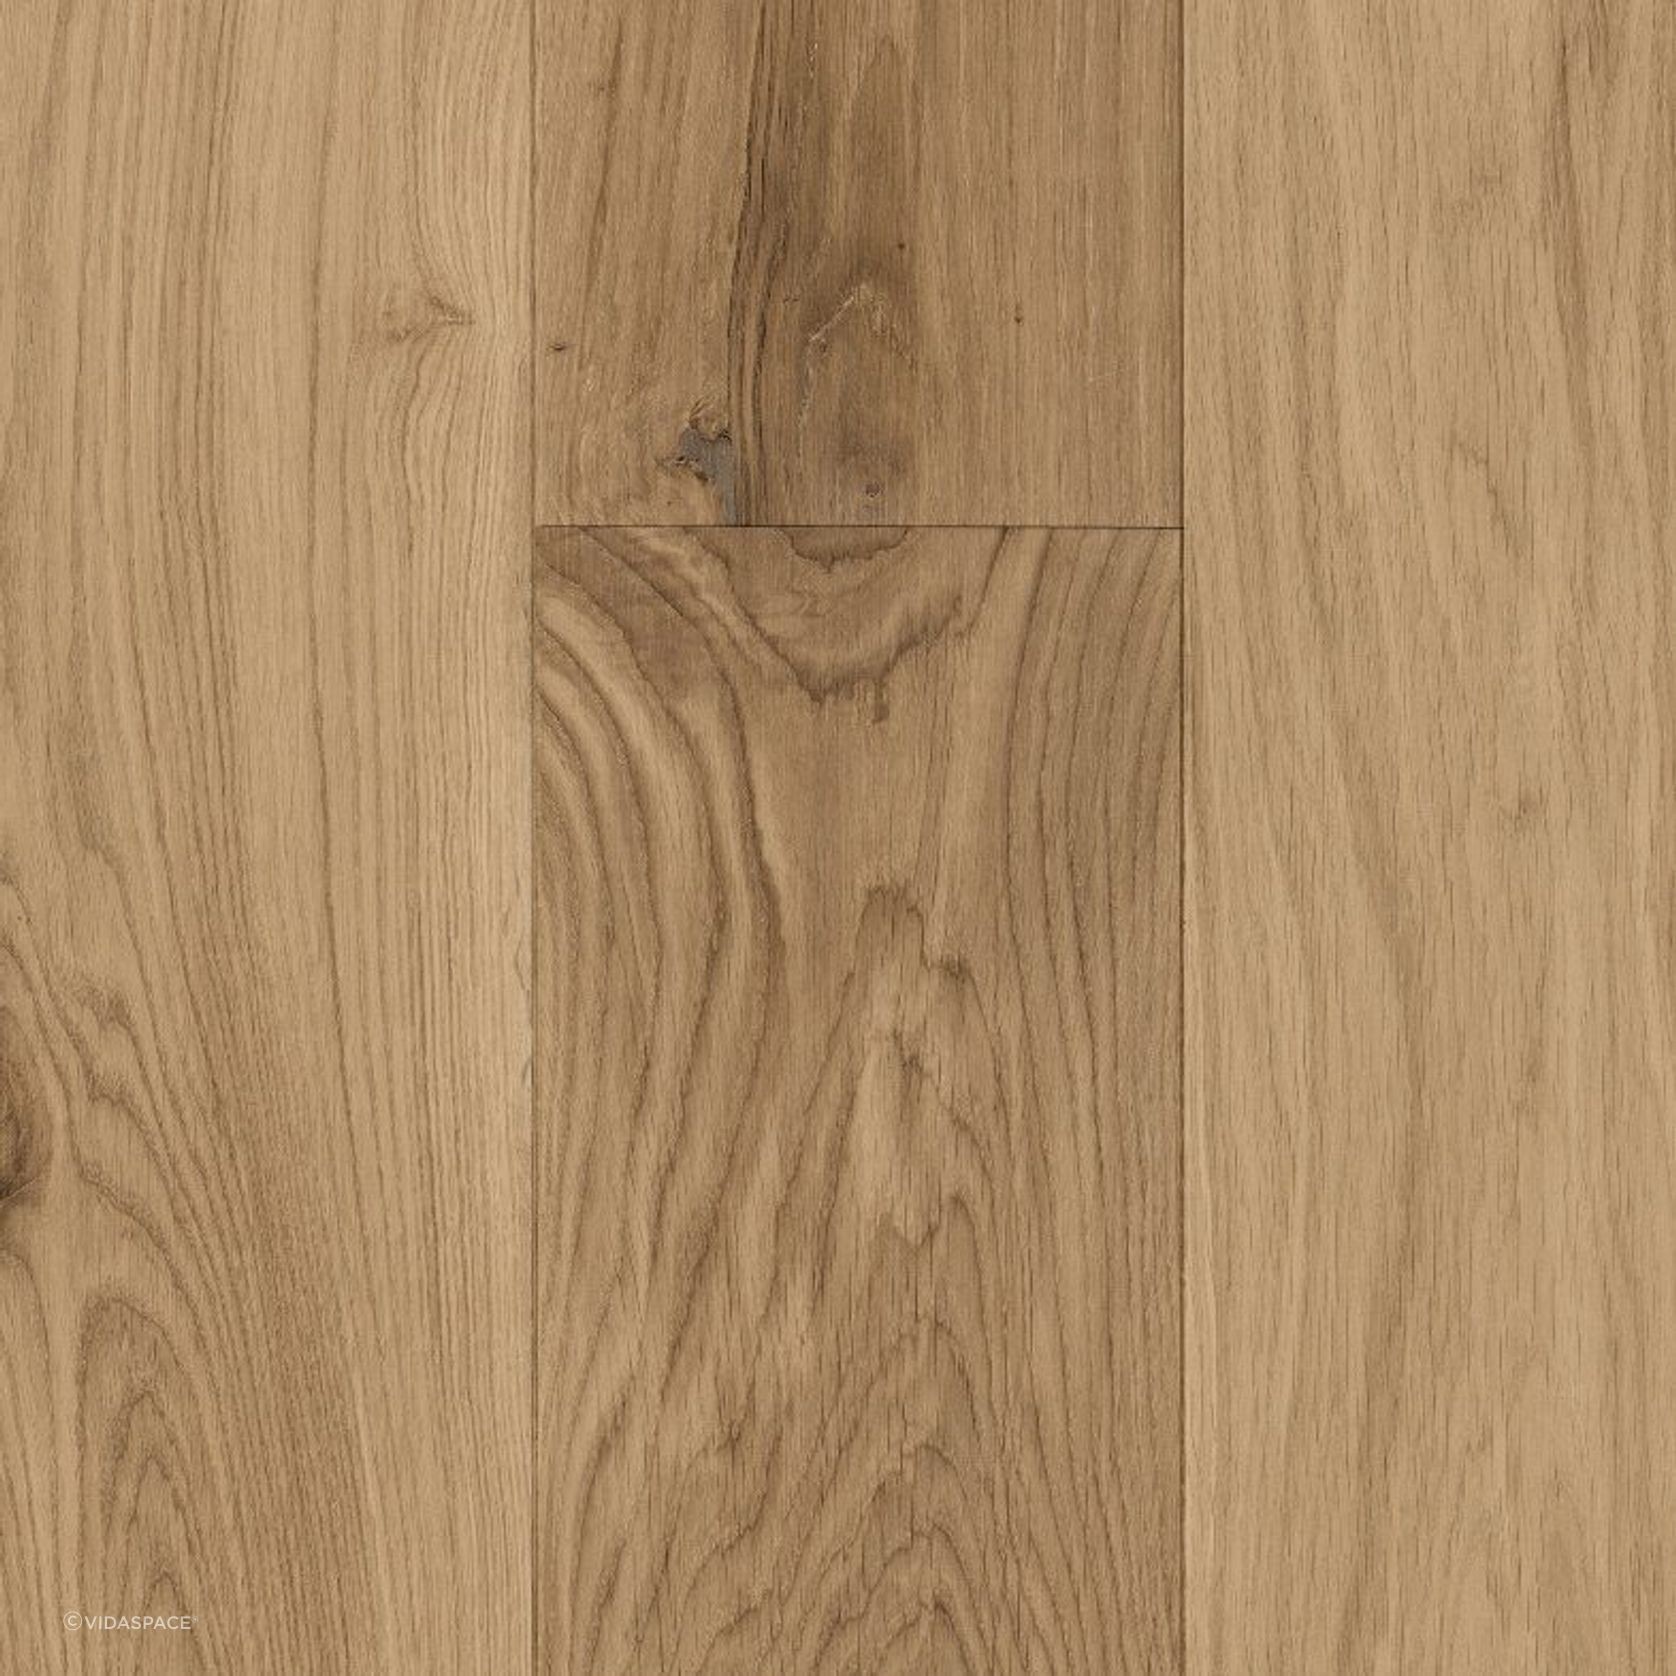 Aspen Raw Venture Plank Timber Flooring gallery detail image